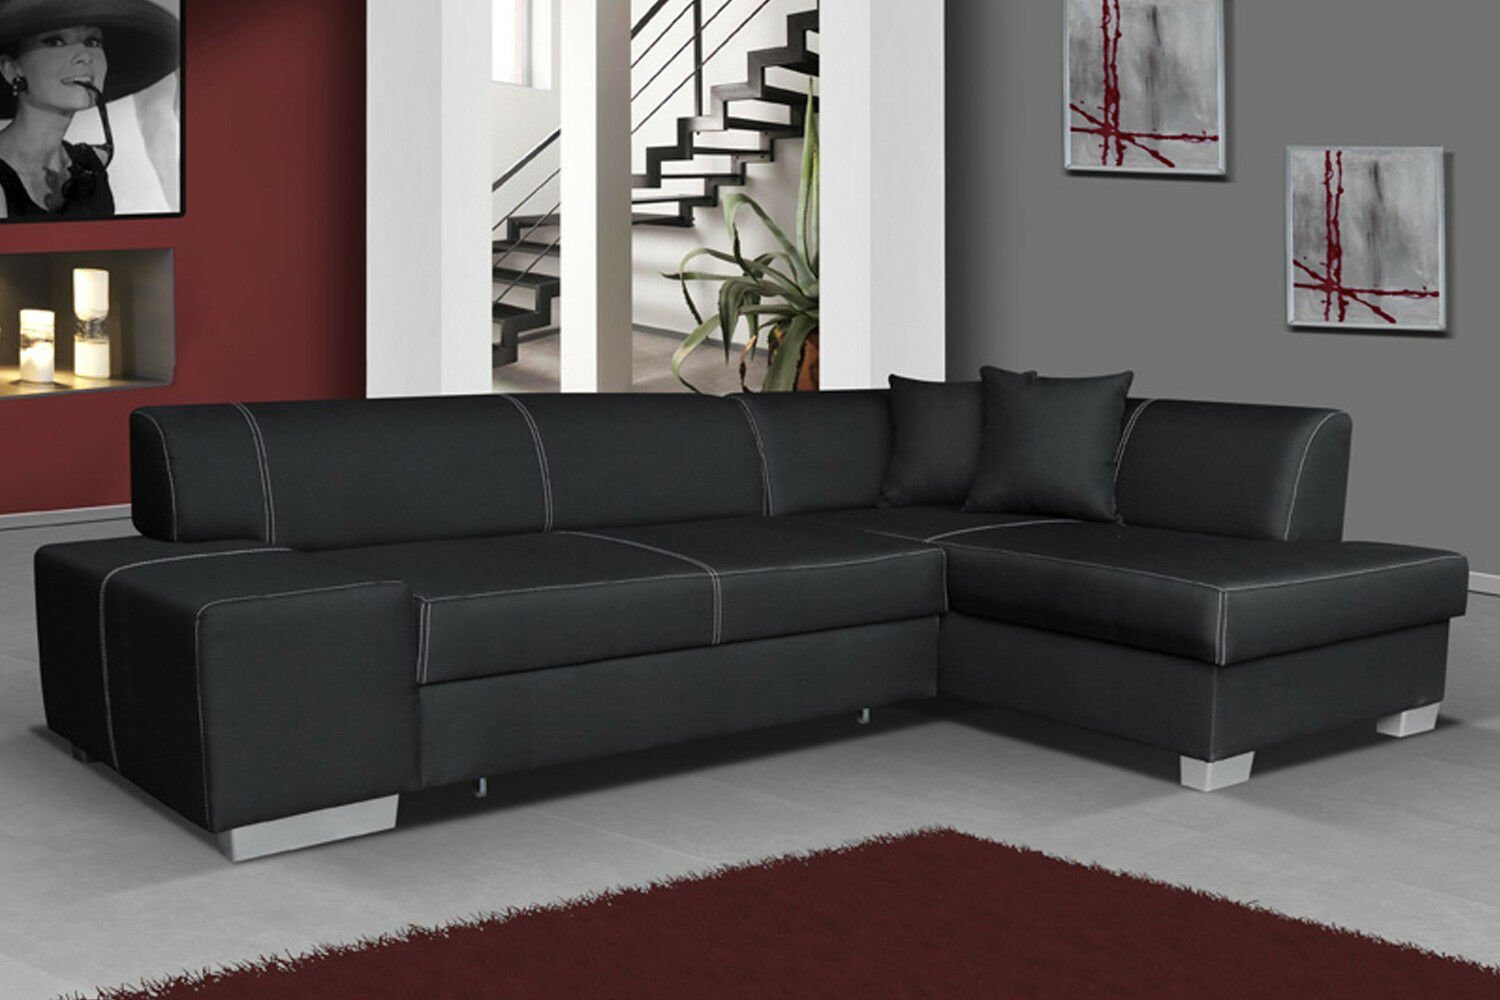 JVmoebel Ecksofa, Design Ecksofa Schlafsofa Bettfunktion Couch Leder Textil Polster Schwarz